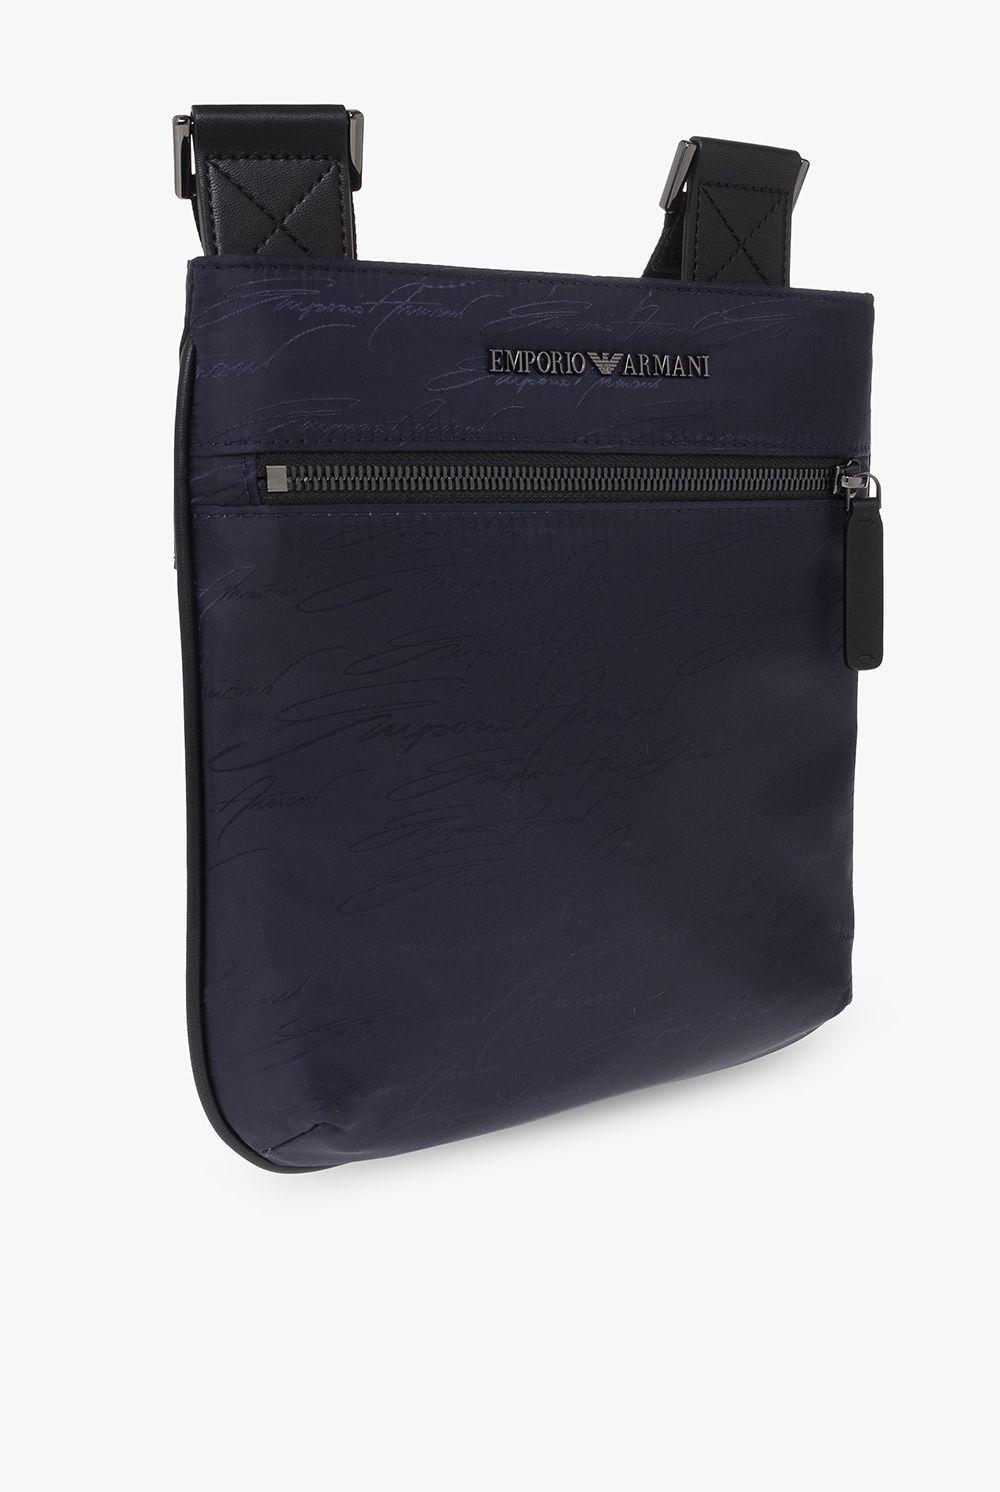 Emporio Armani Shoulder Bag With Logo in Blue for Men | Lyst